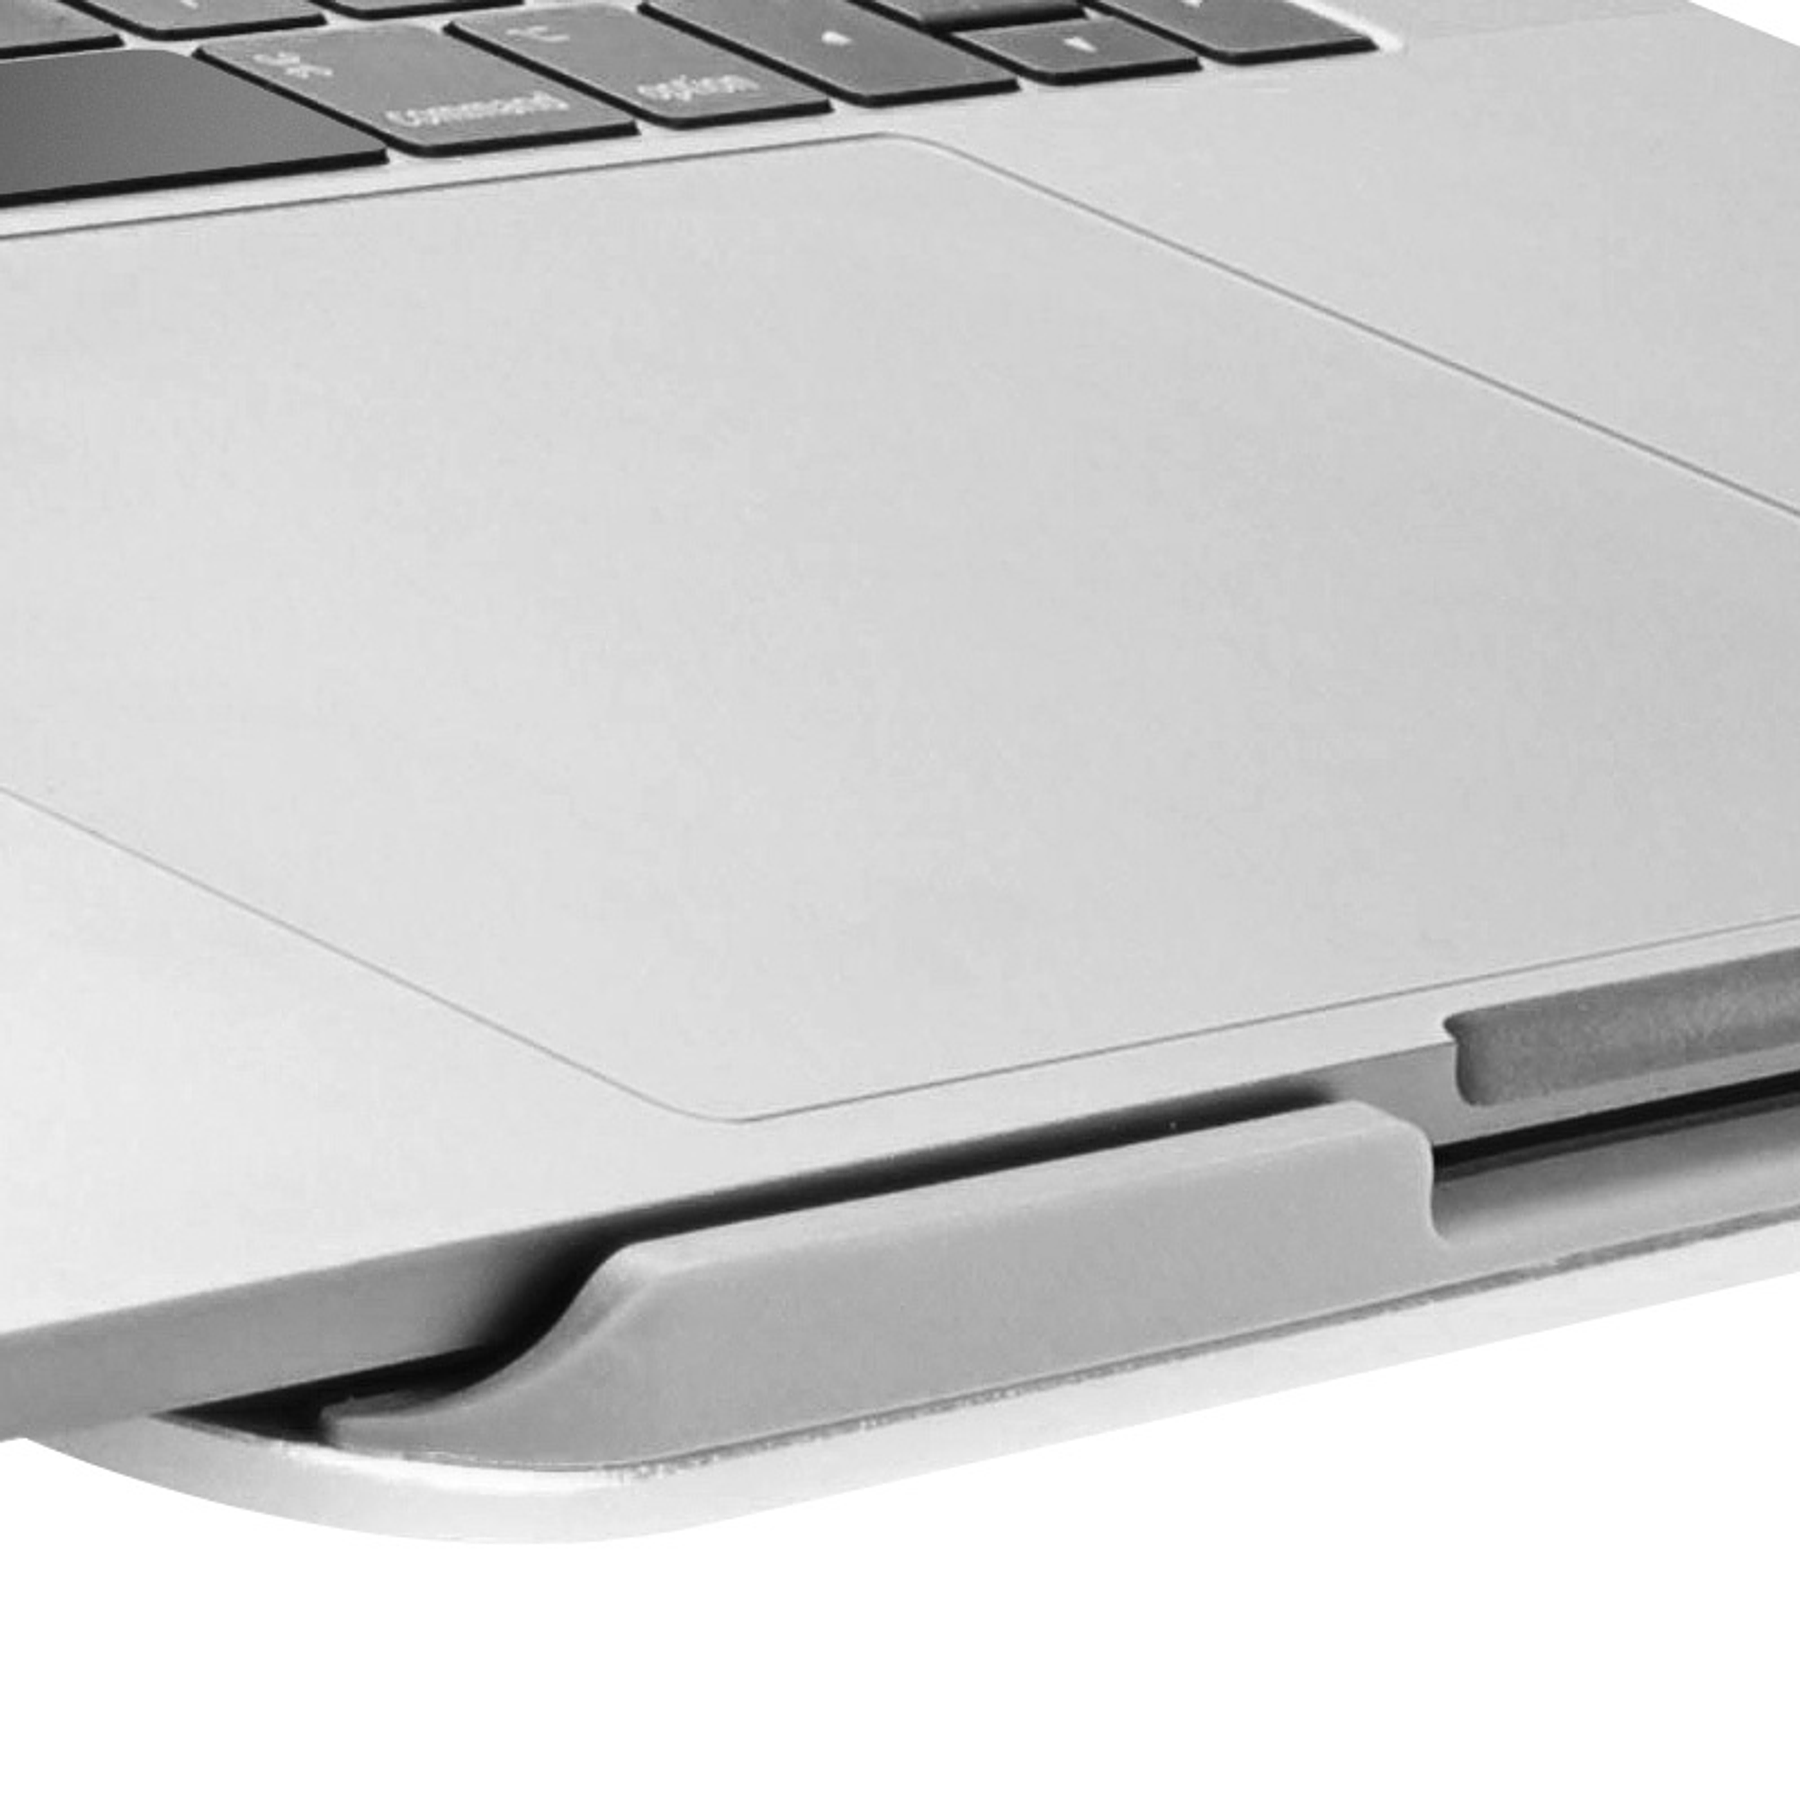 Klip Xtreme Soporte Portátil de Aluminio para Notebooks hasta 15.6